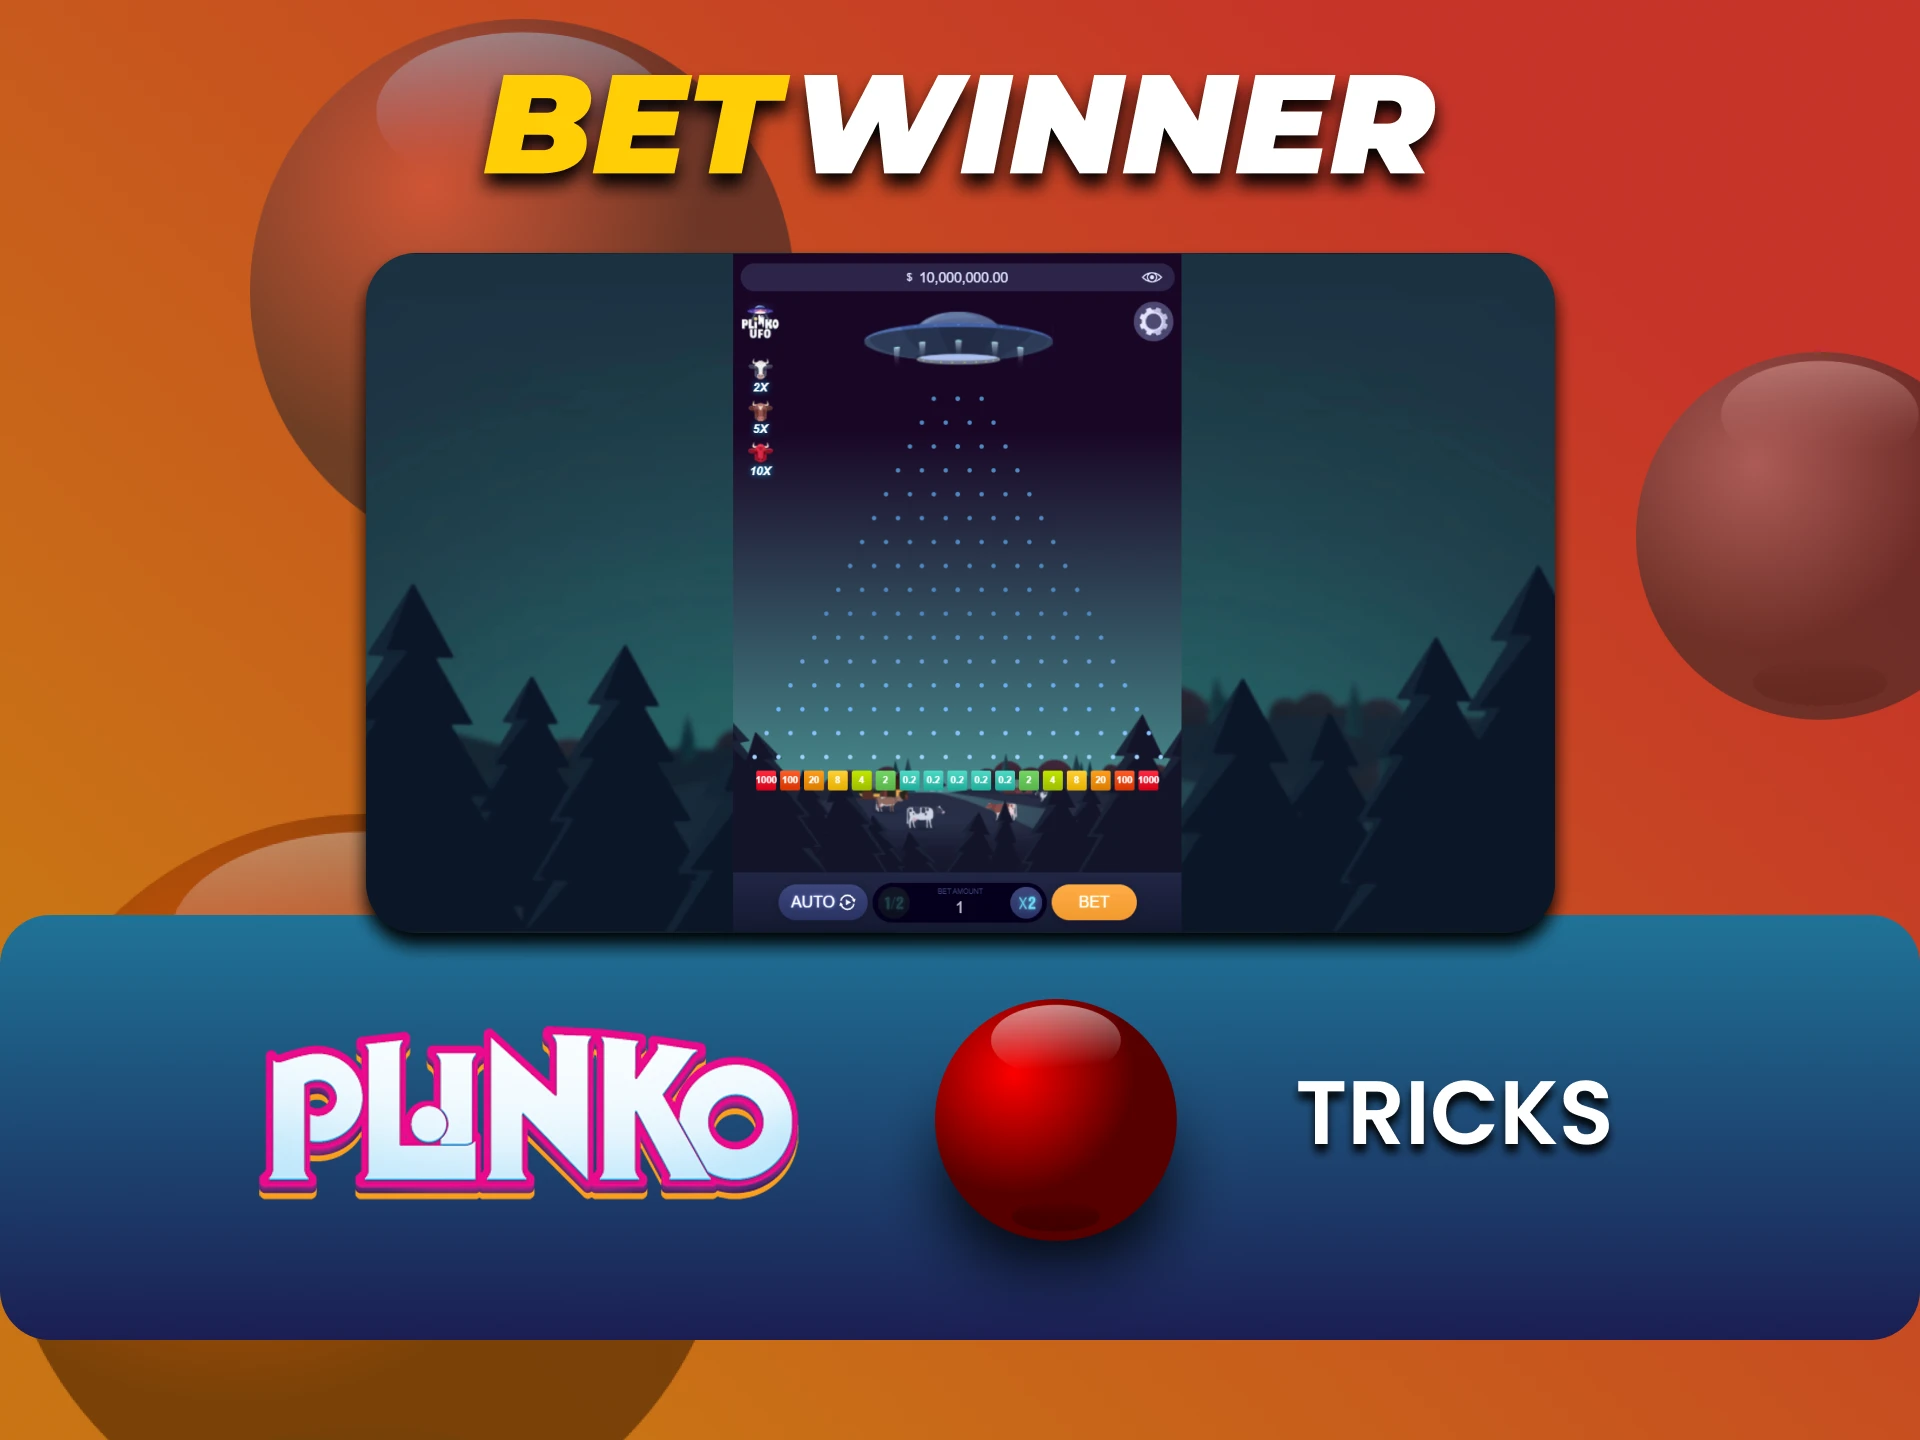 Learn tricks to win Plinko at Betwinner.